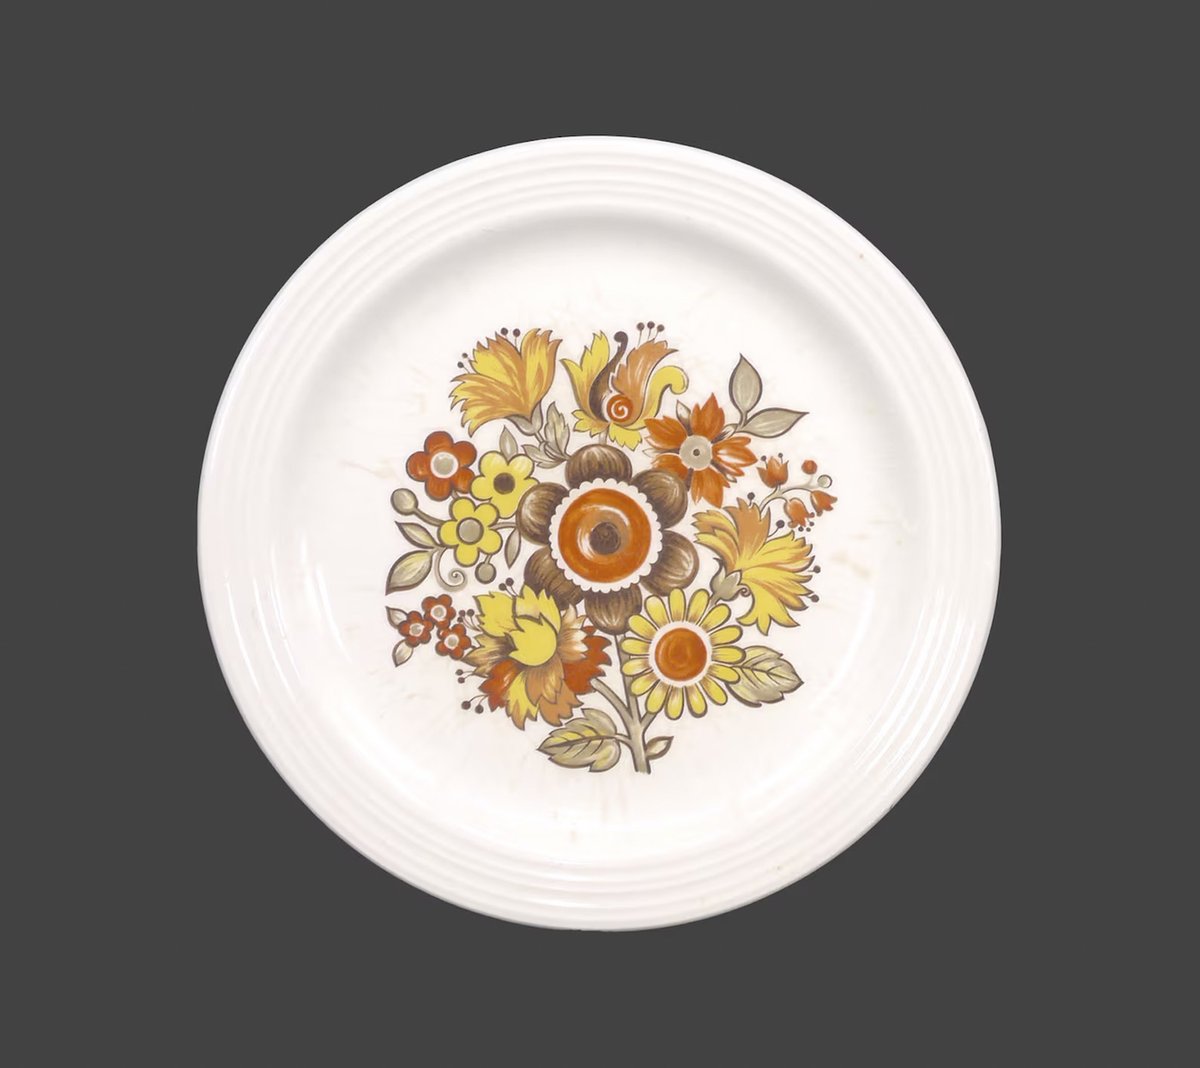 Myott Festival retro bread plate made in England. etsy.me/3Qx57I5 via @Etsy #BuyfromGroovy #antiqueshop #tabledecor #tableware #dinnerware #1970skitchen #retrotableware #Myott #MyottFestival #EtsySellers